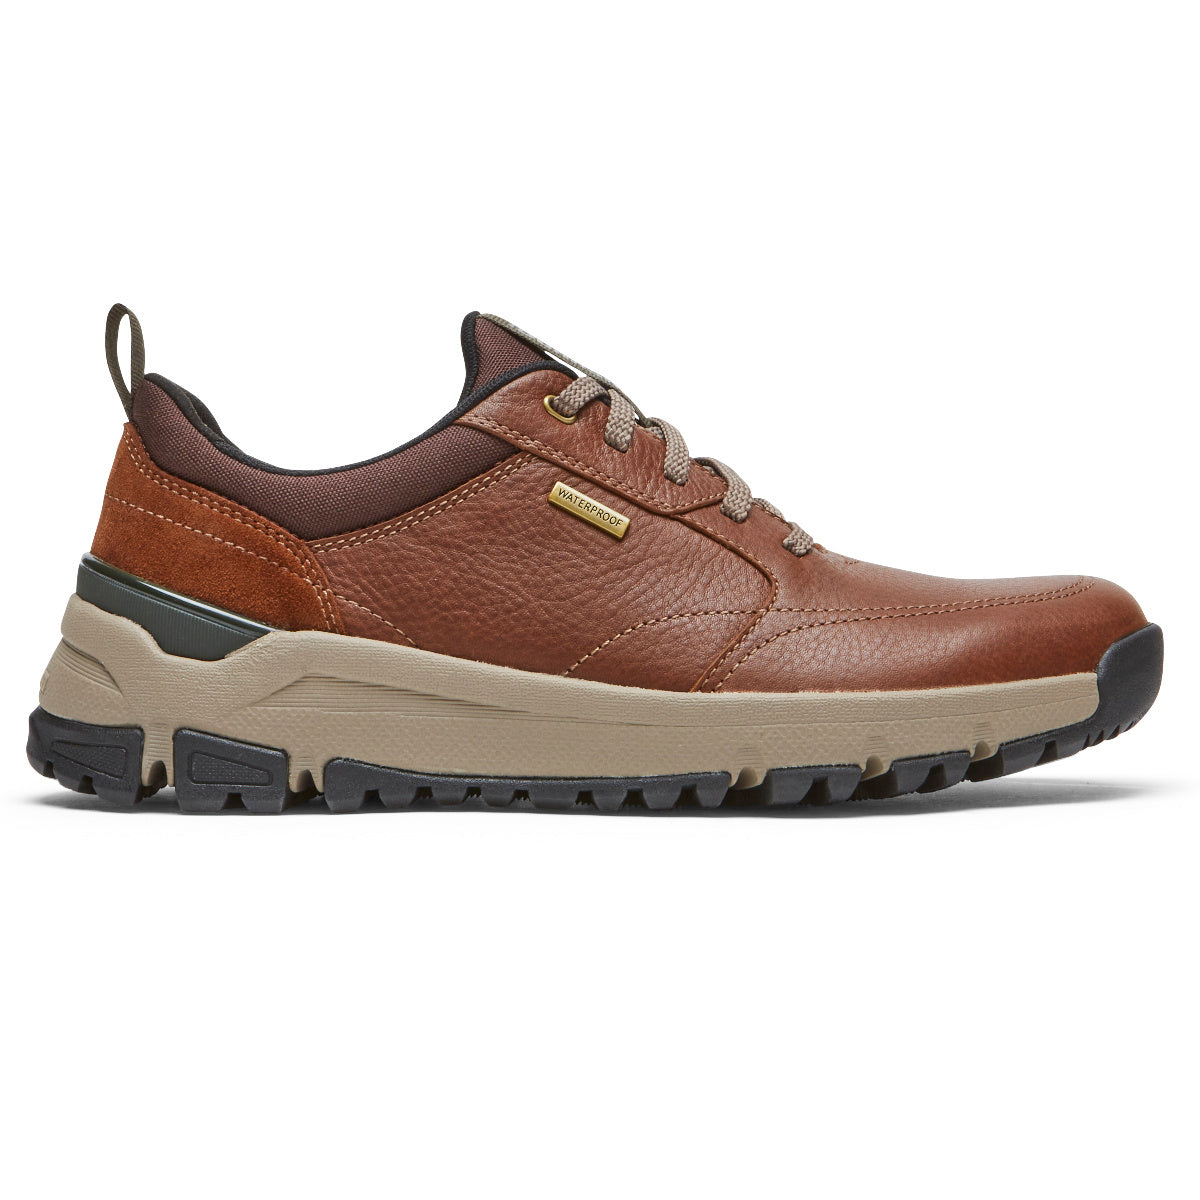 Men's Glastonbury Waterproof uBal Walking Shoe